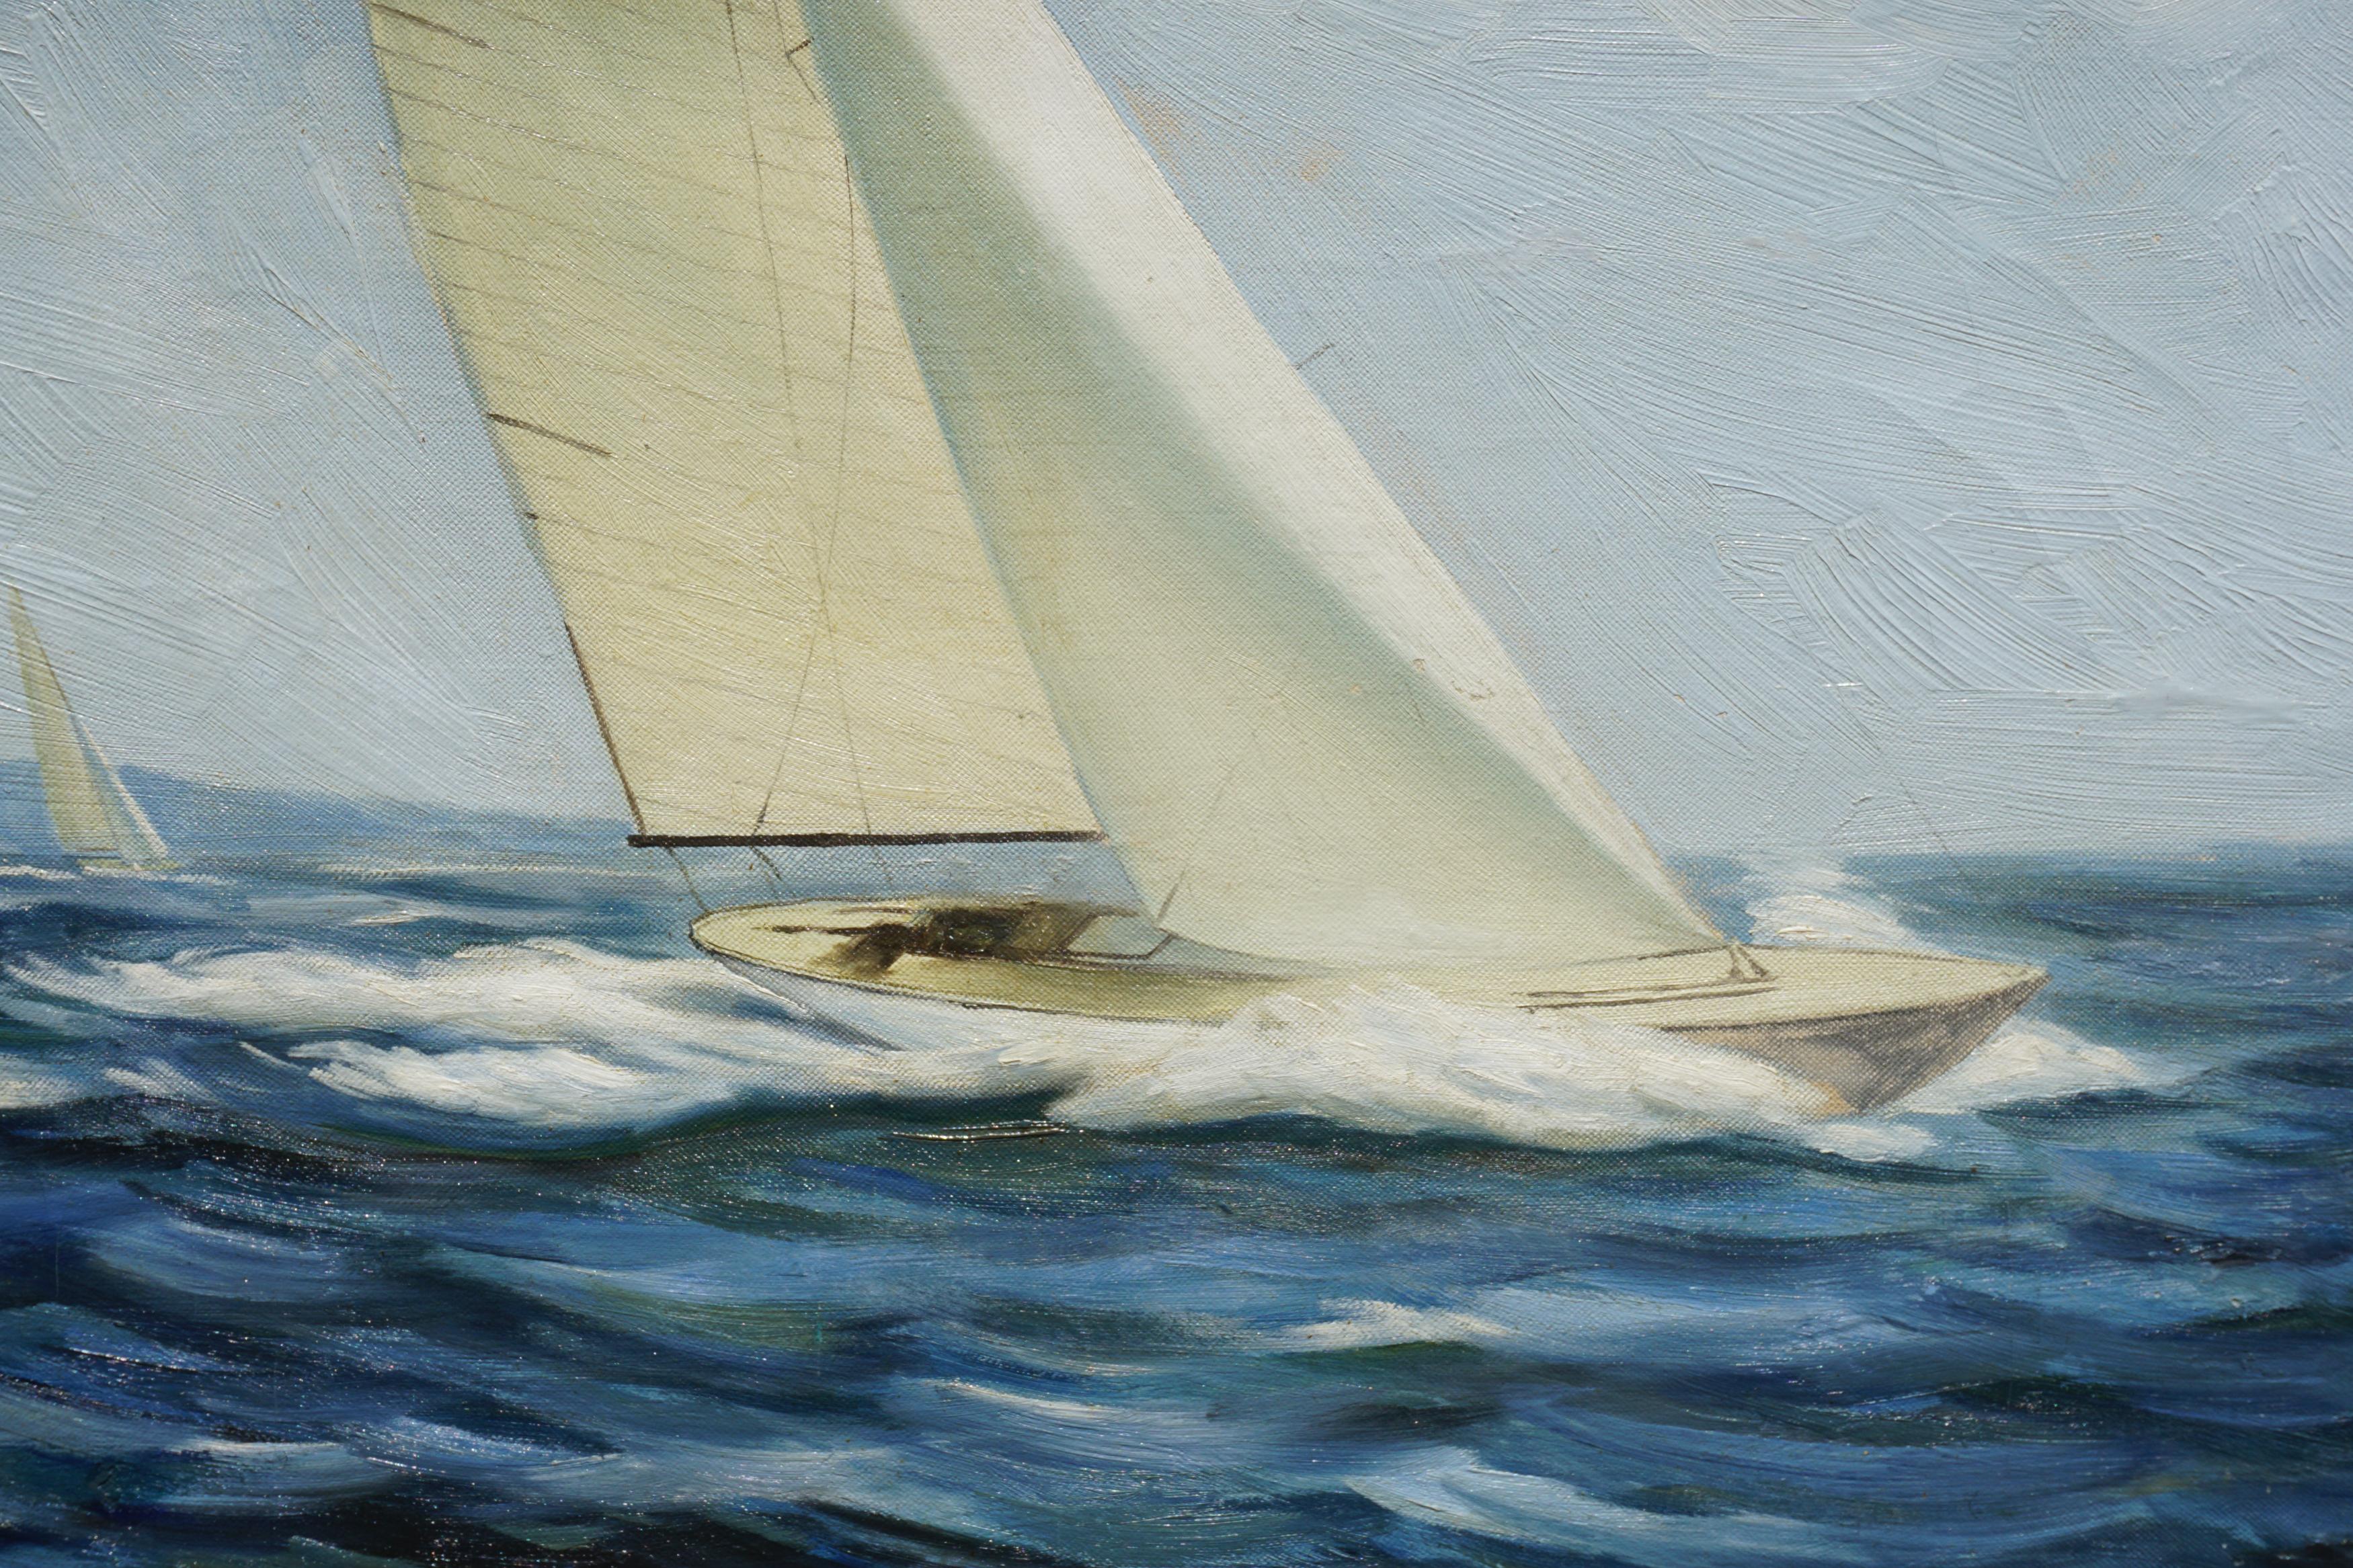 Sloop at Full Sail - Nautical Seascape  - Painting by  L Raymond Jones